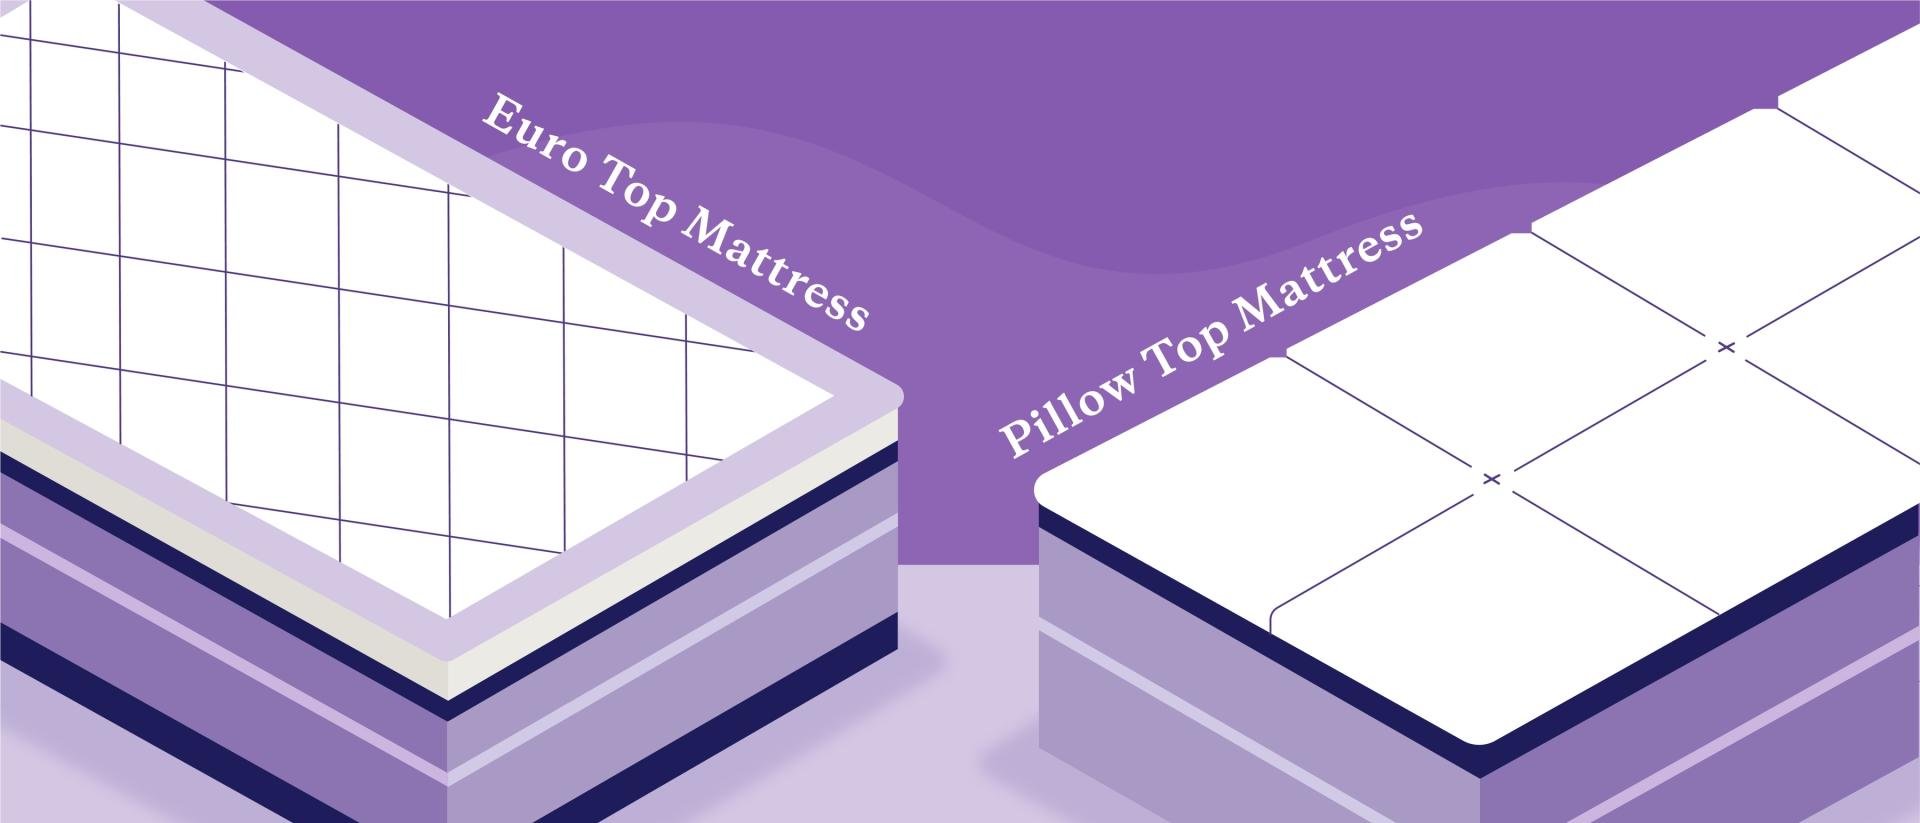 euro top vs pillow top mattress